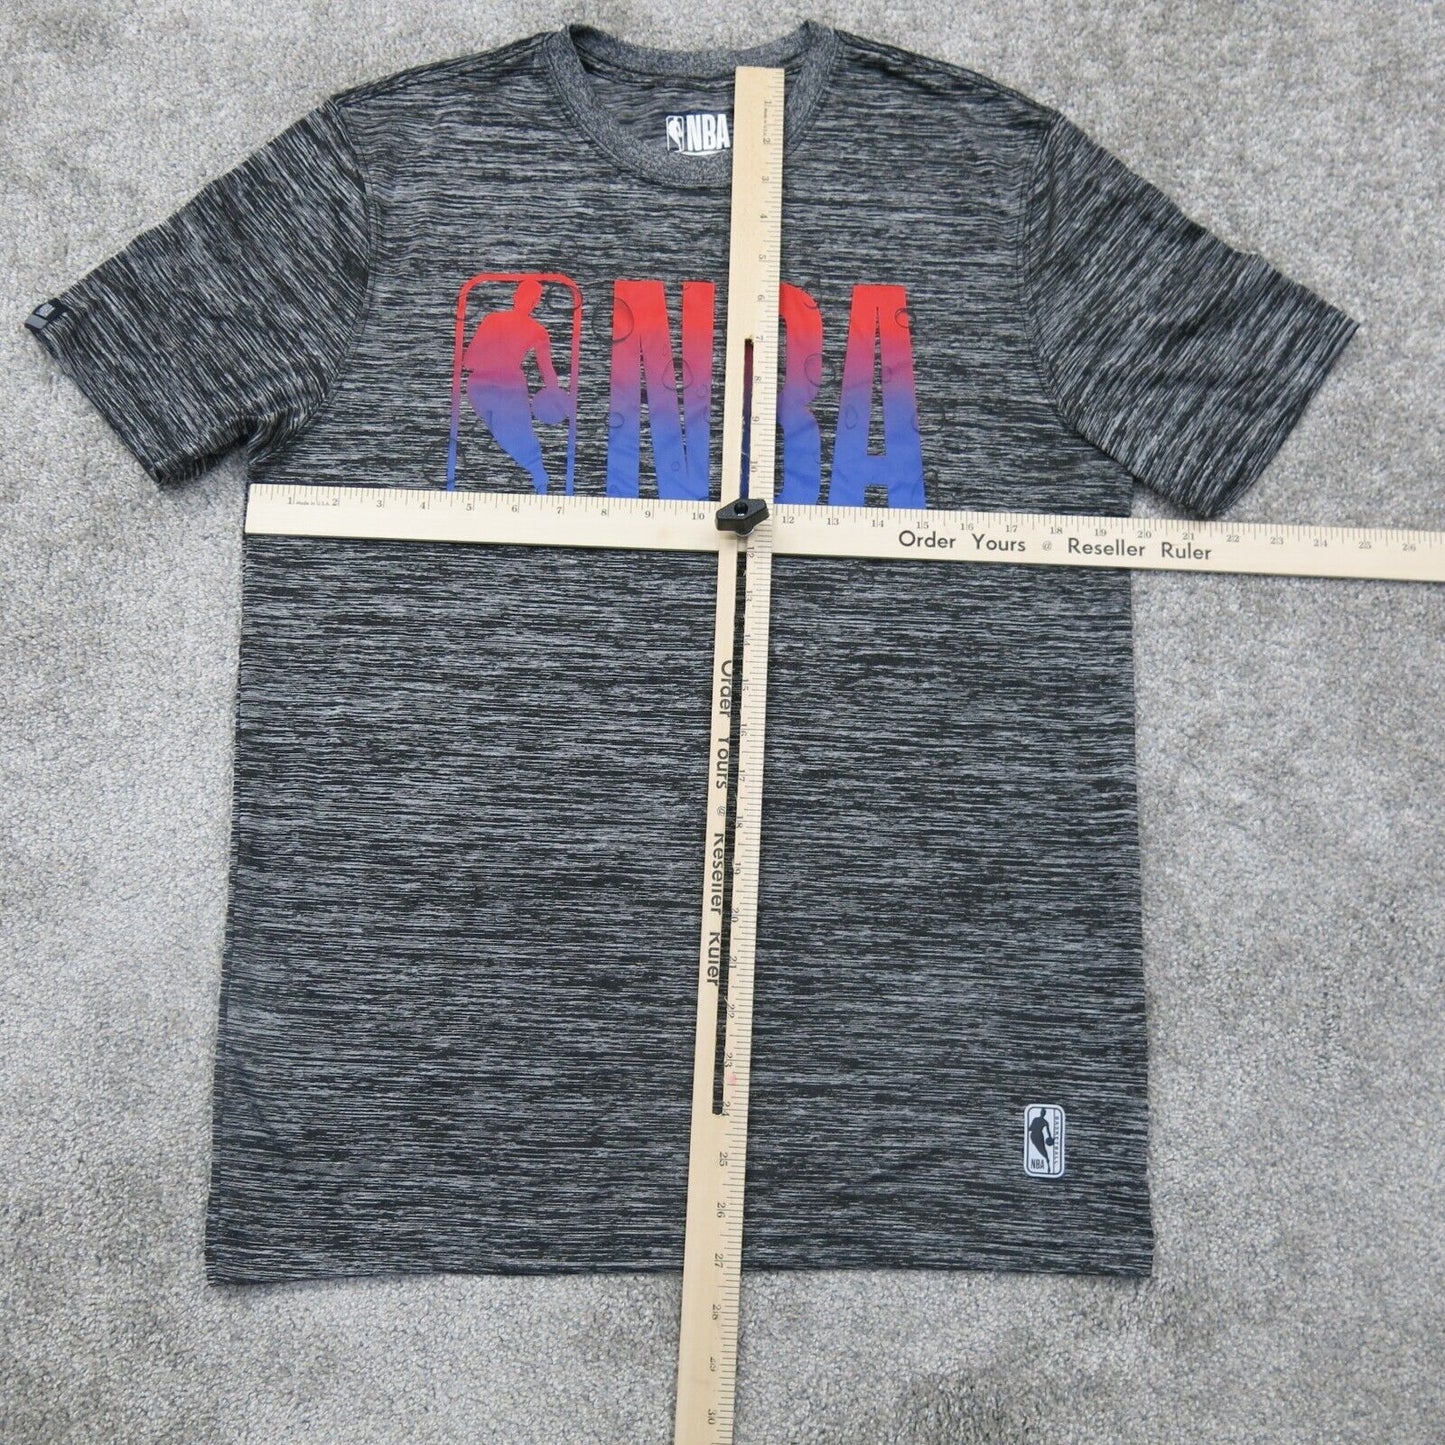 NBA Mens Sportswear Logo Basketball T Shirt Short Sleeves Charcoal Gray Size M